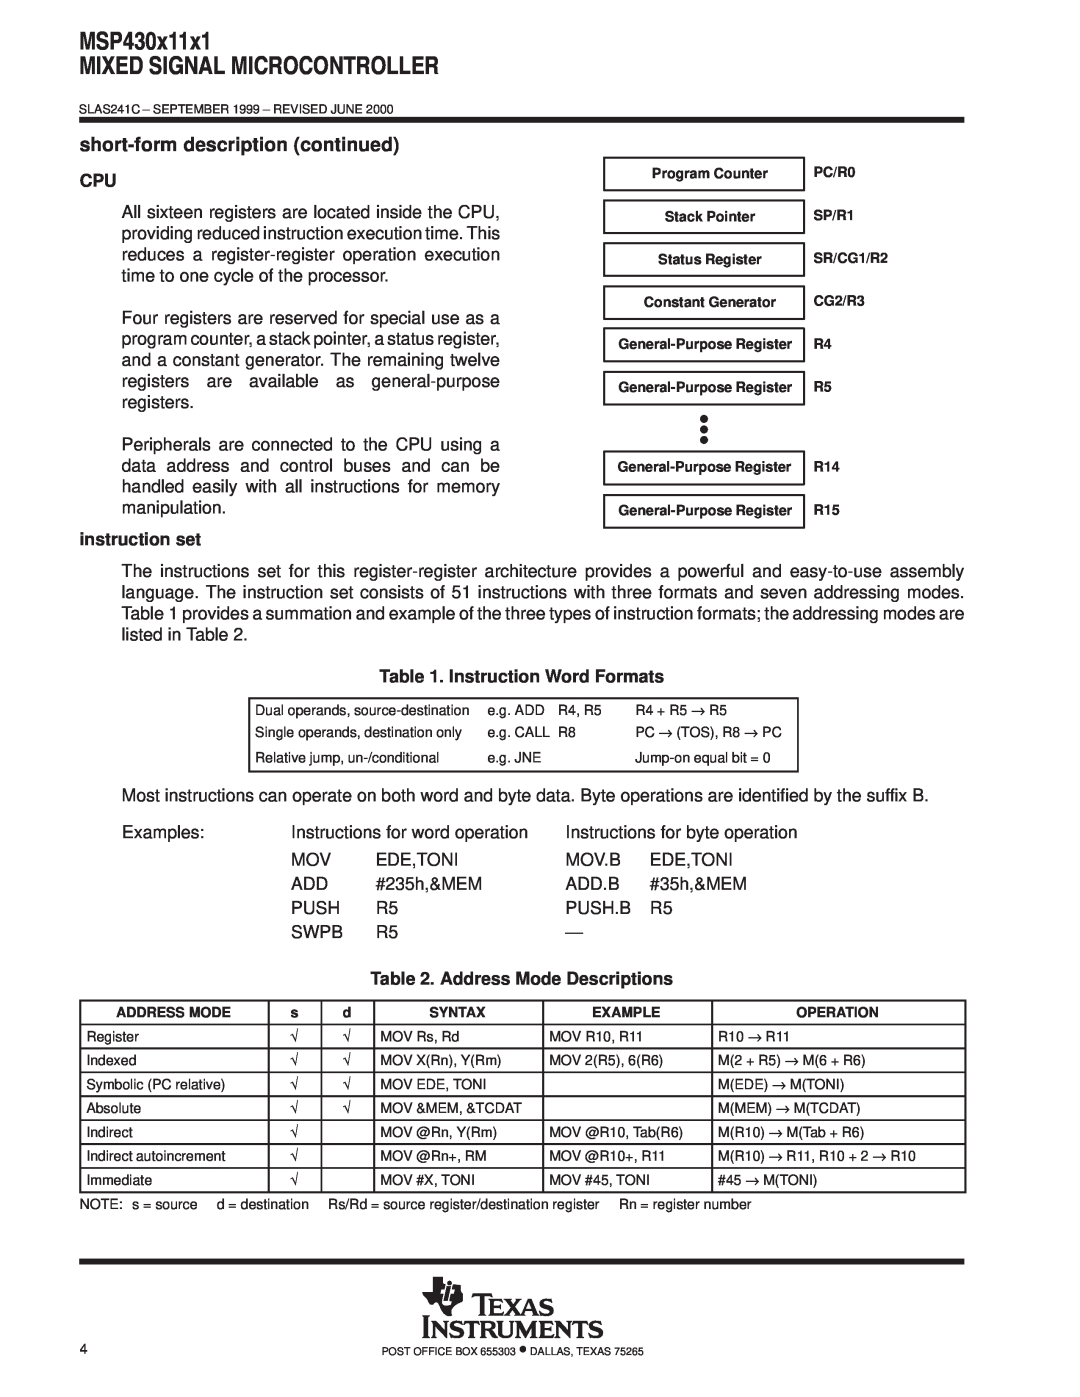 Texas Instruments MSP430x11x1 warranty short-form description continued, instruction set, Instruction Word Formats 